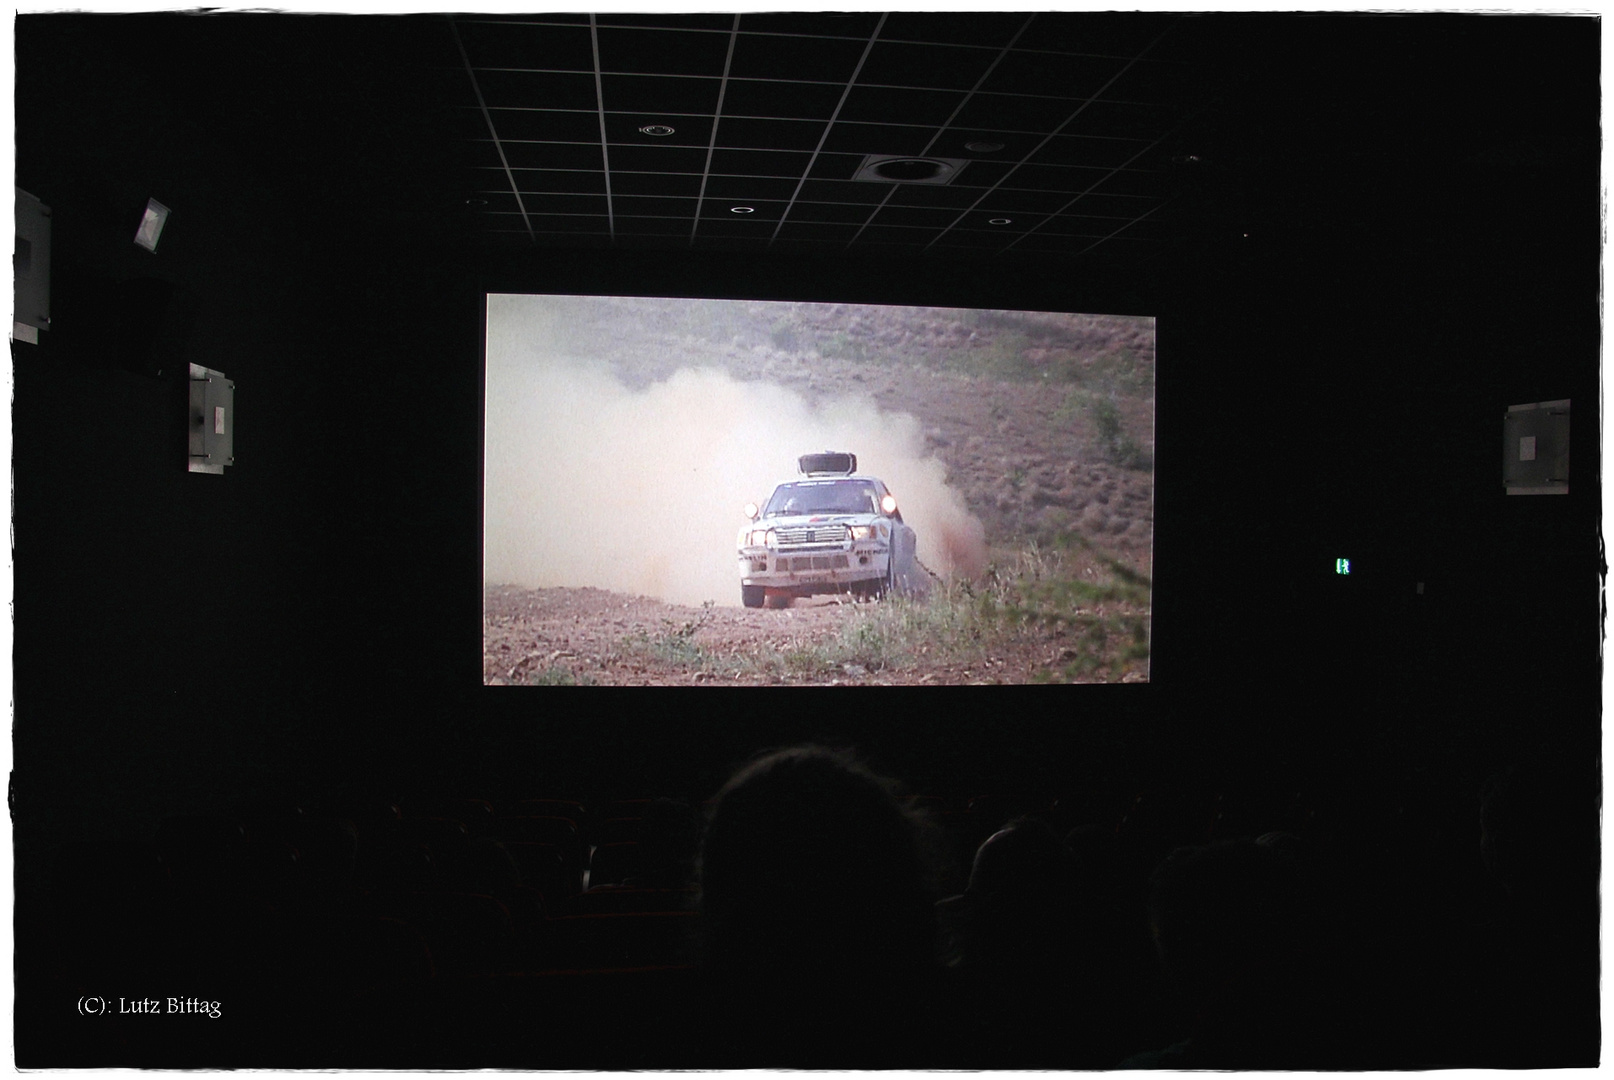 Rallye im Kino